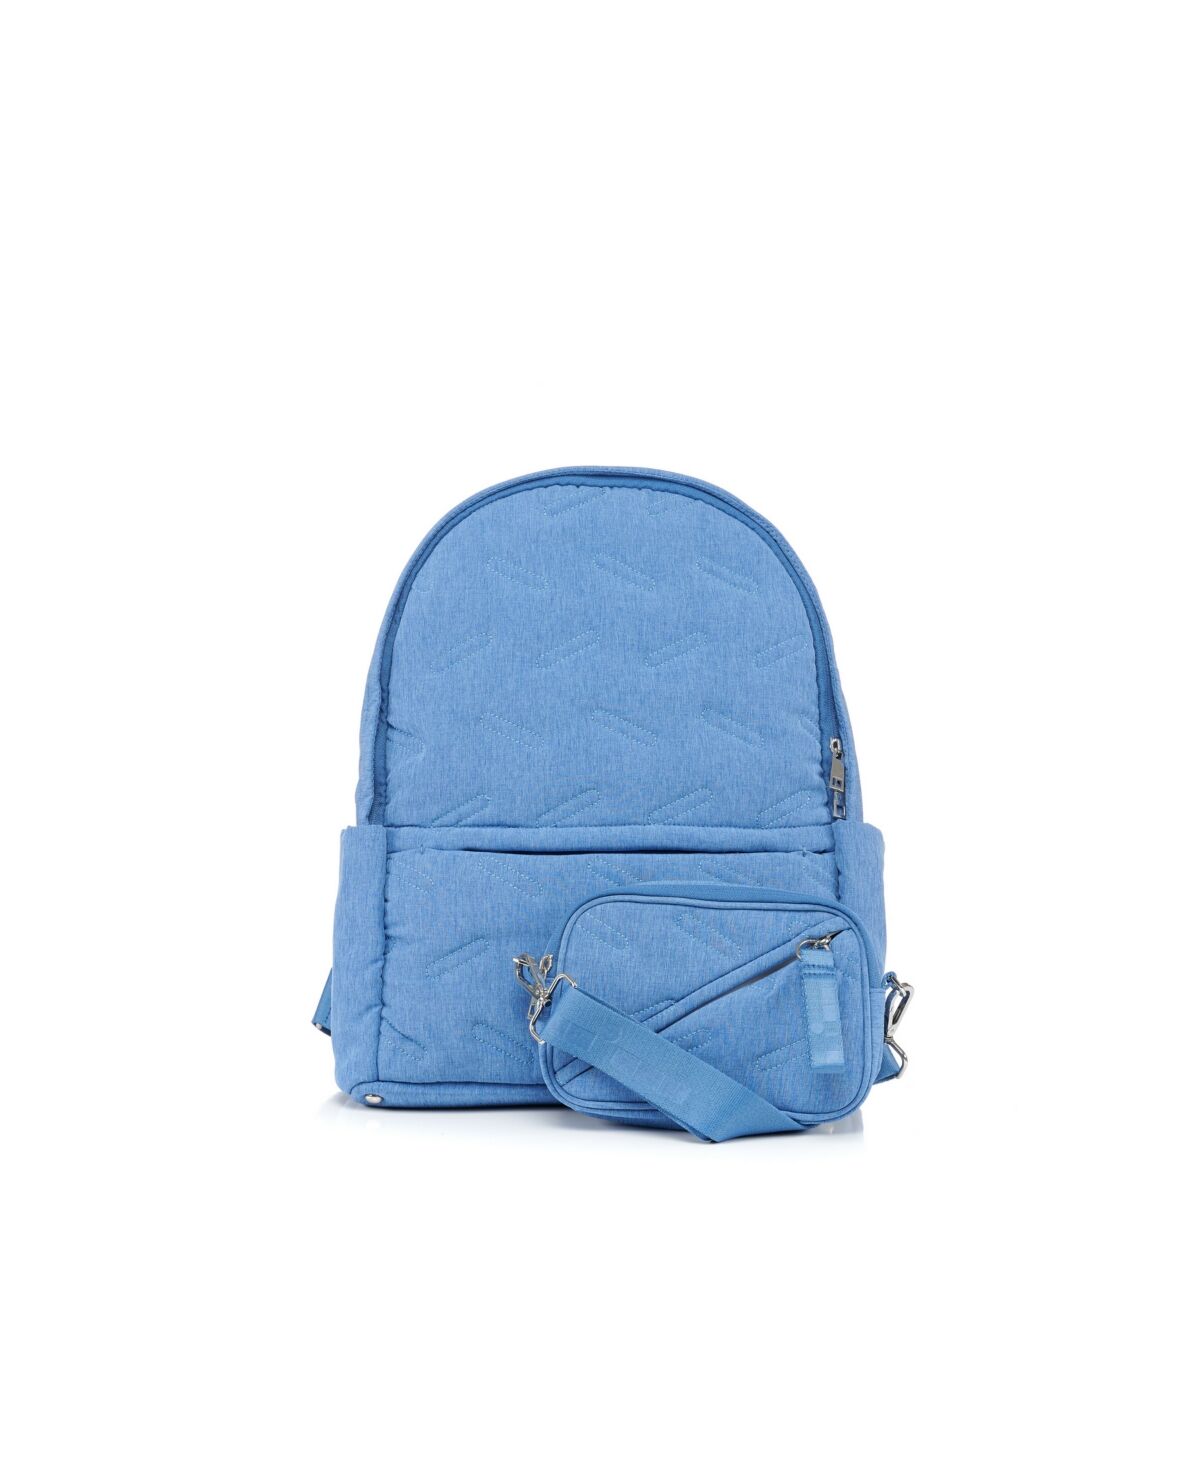 Go Dash Dot Maya Backpack with matching crossbody/belt bag - Denim